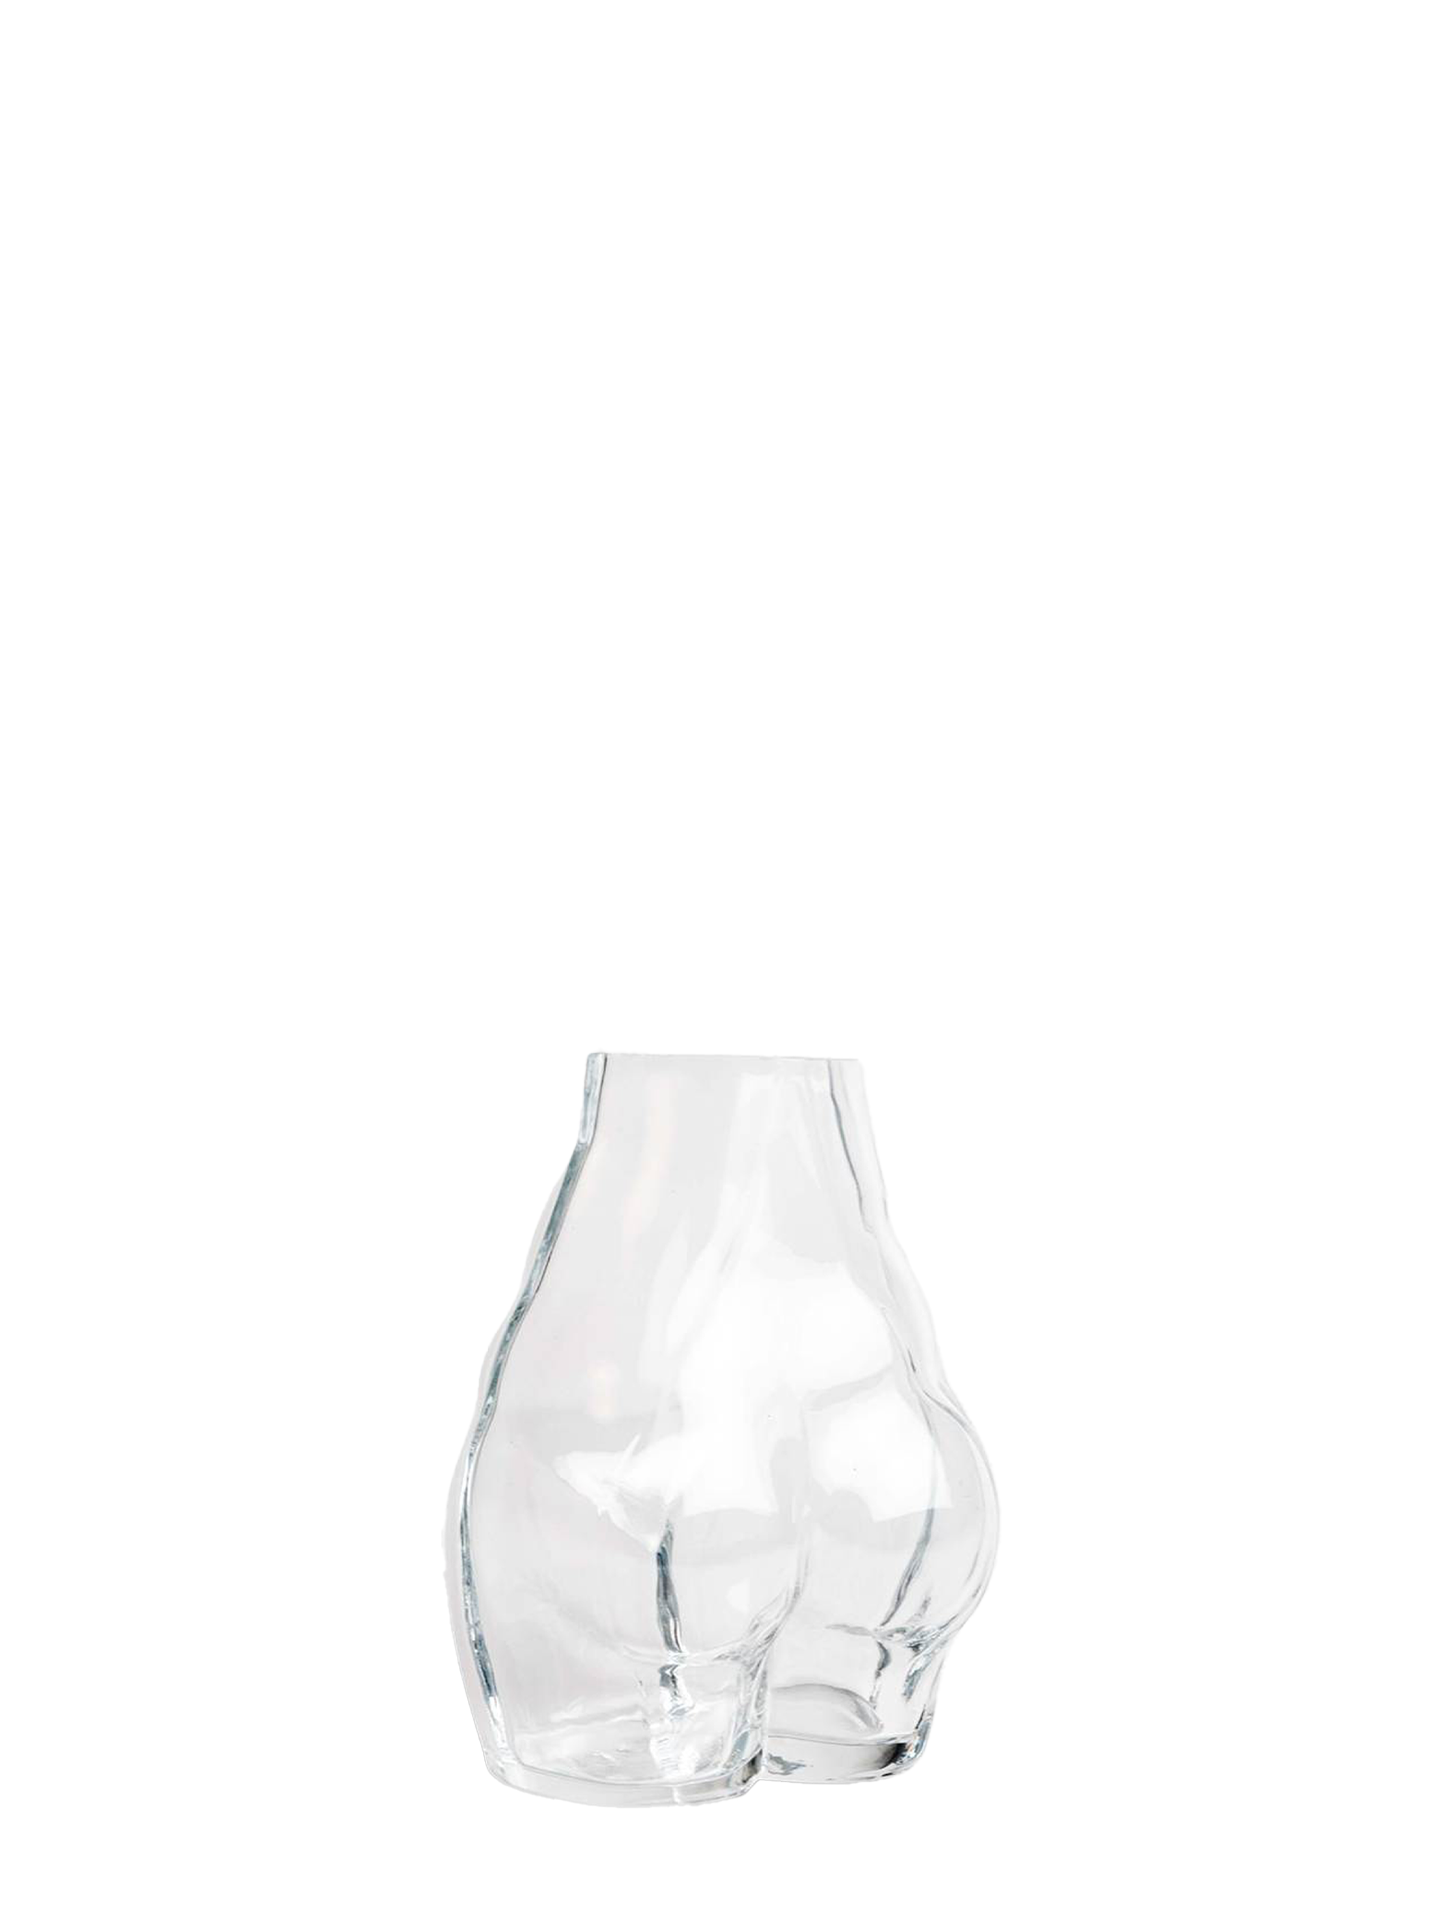 Butt glass vase, small